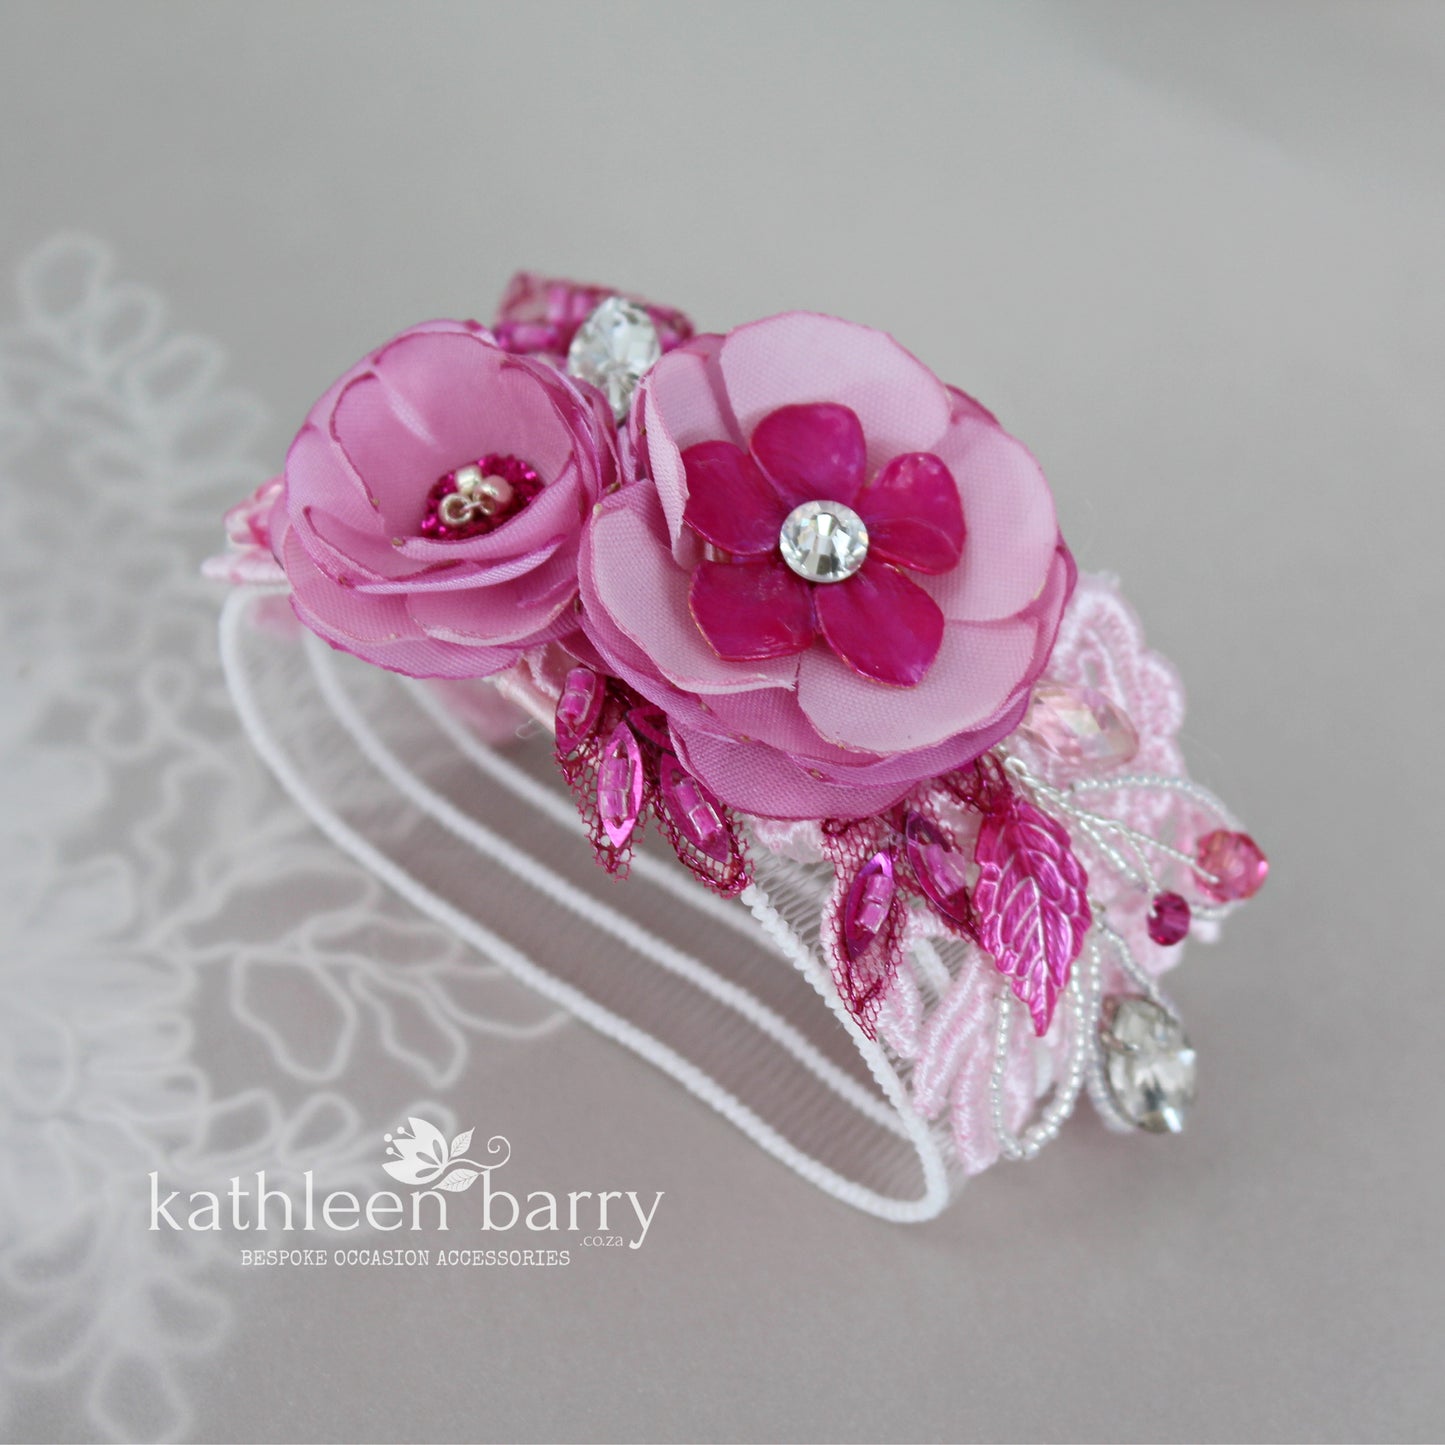 Saskia wrist corsage cuff bracelet - Colors to order - prom matric dance - Bridesmades